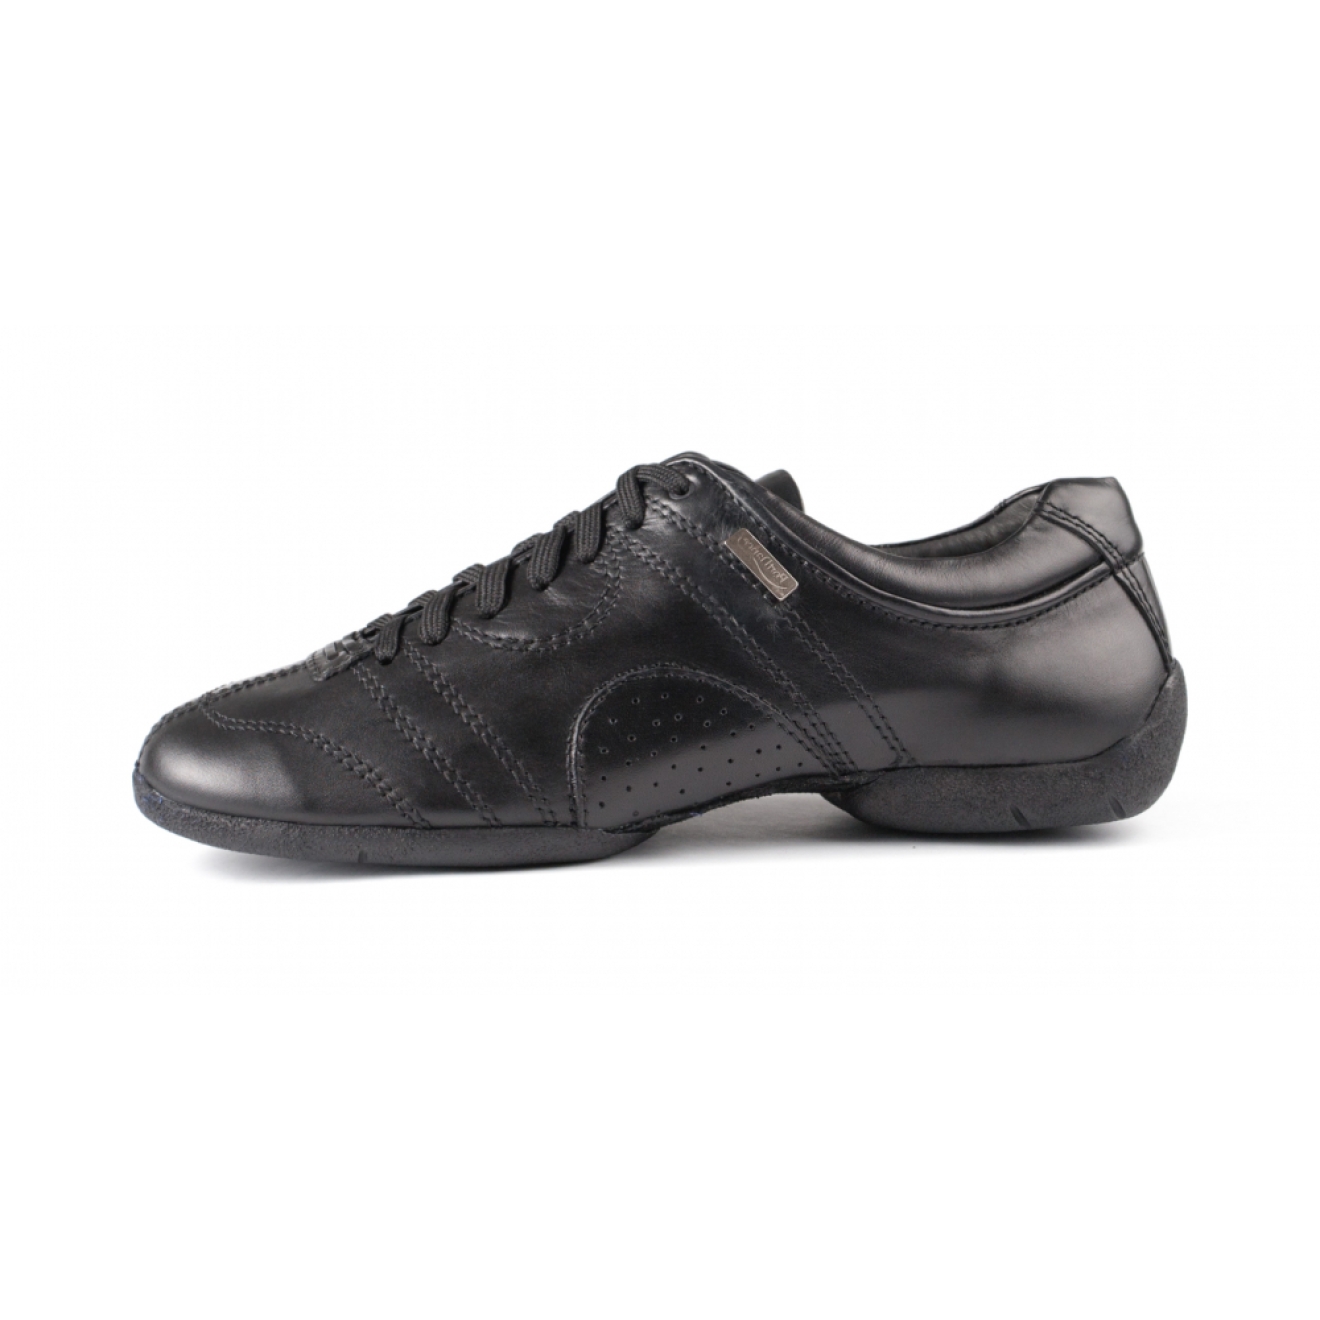 PortDance PD Casual 001, schwarz Leder, Sneaker